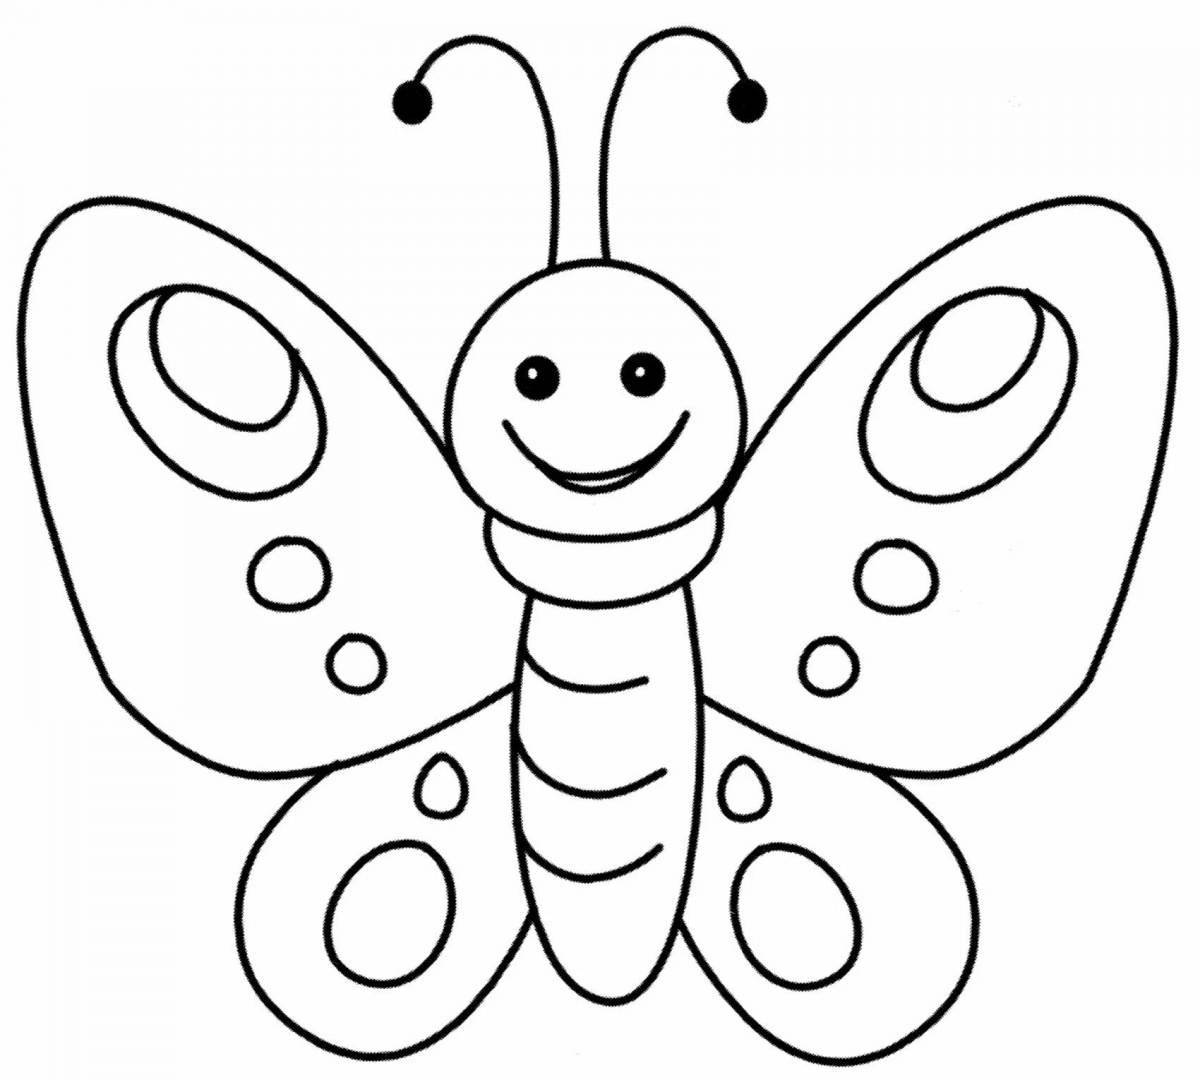 Гламурная бабочка-раскраска для детей 2-3 лет